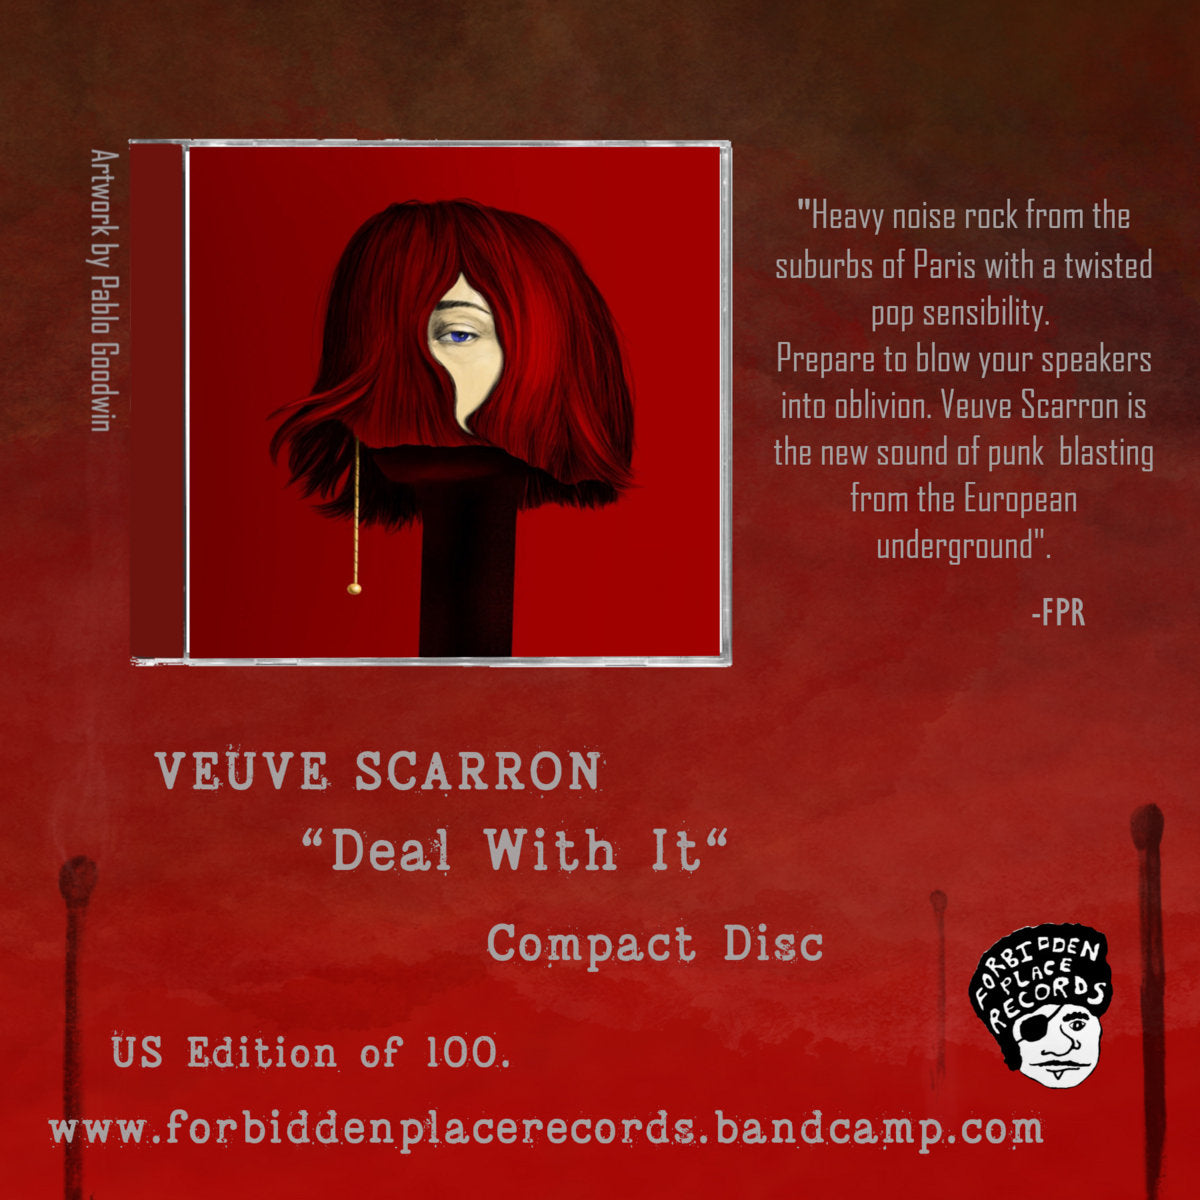 Veuve Scarron - "Deal With It" Compact Disc